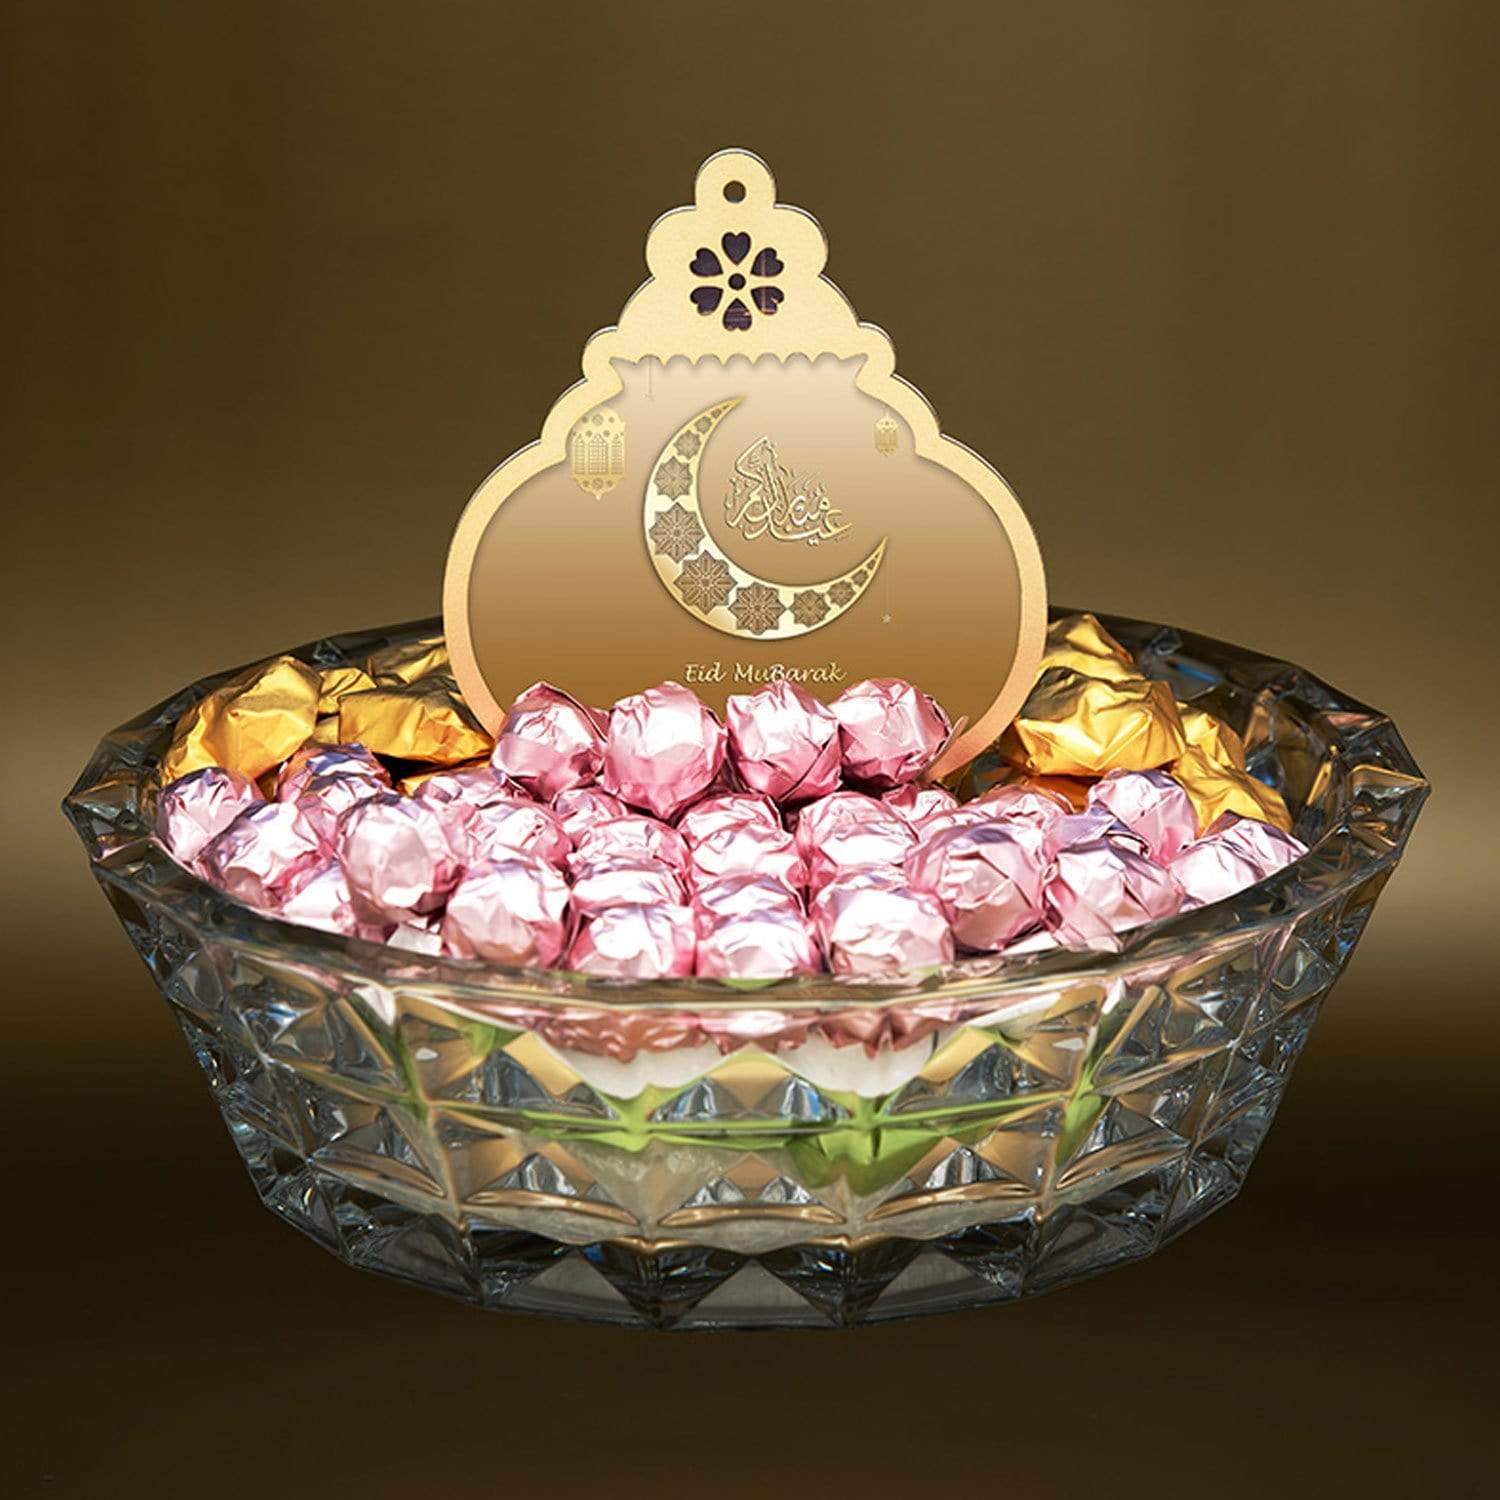 Bohemia Crystal Glass Diamond Bowl with 1kg chocolate - 32.5 cm - 5390879 - Jashanmal Home